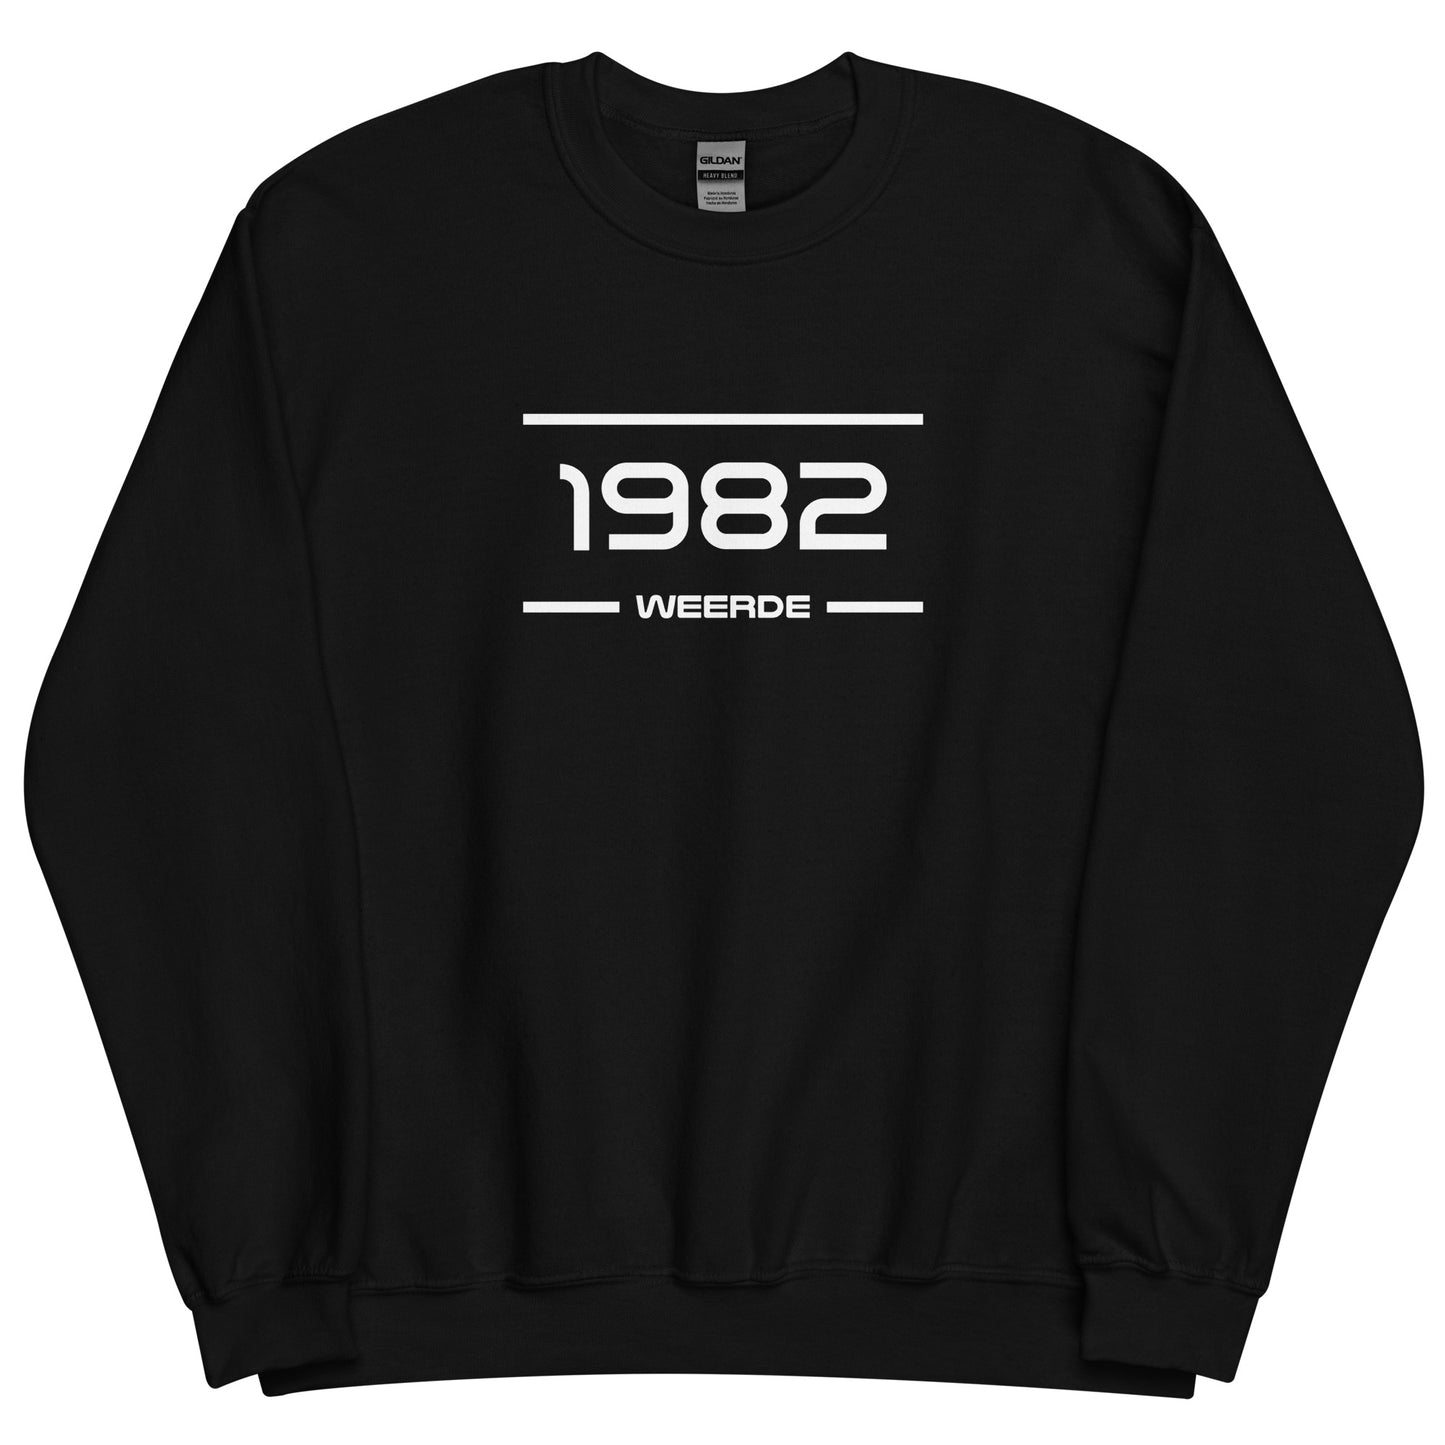 Sweater - 1982 - Weerde (M/V)